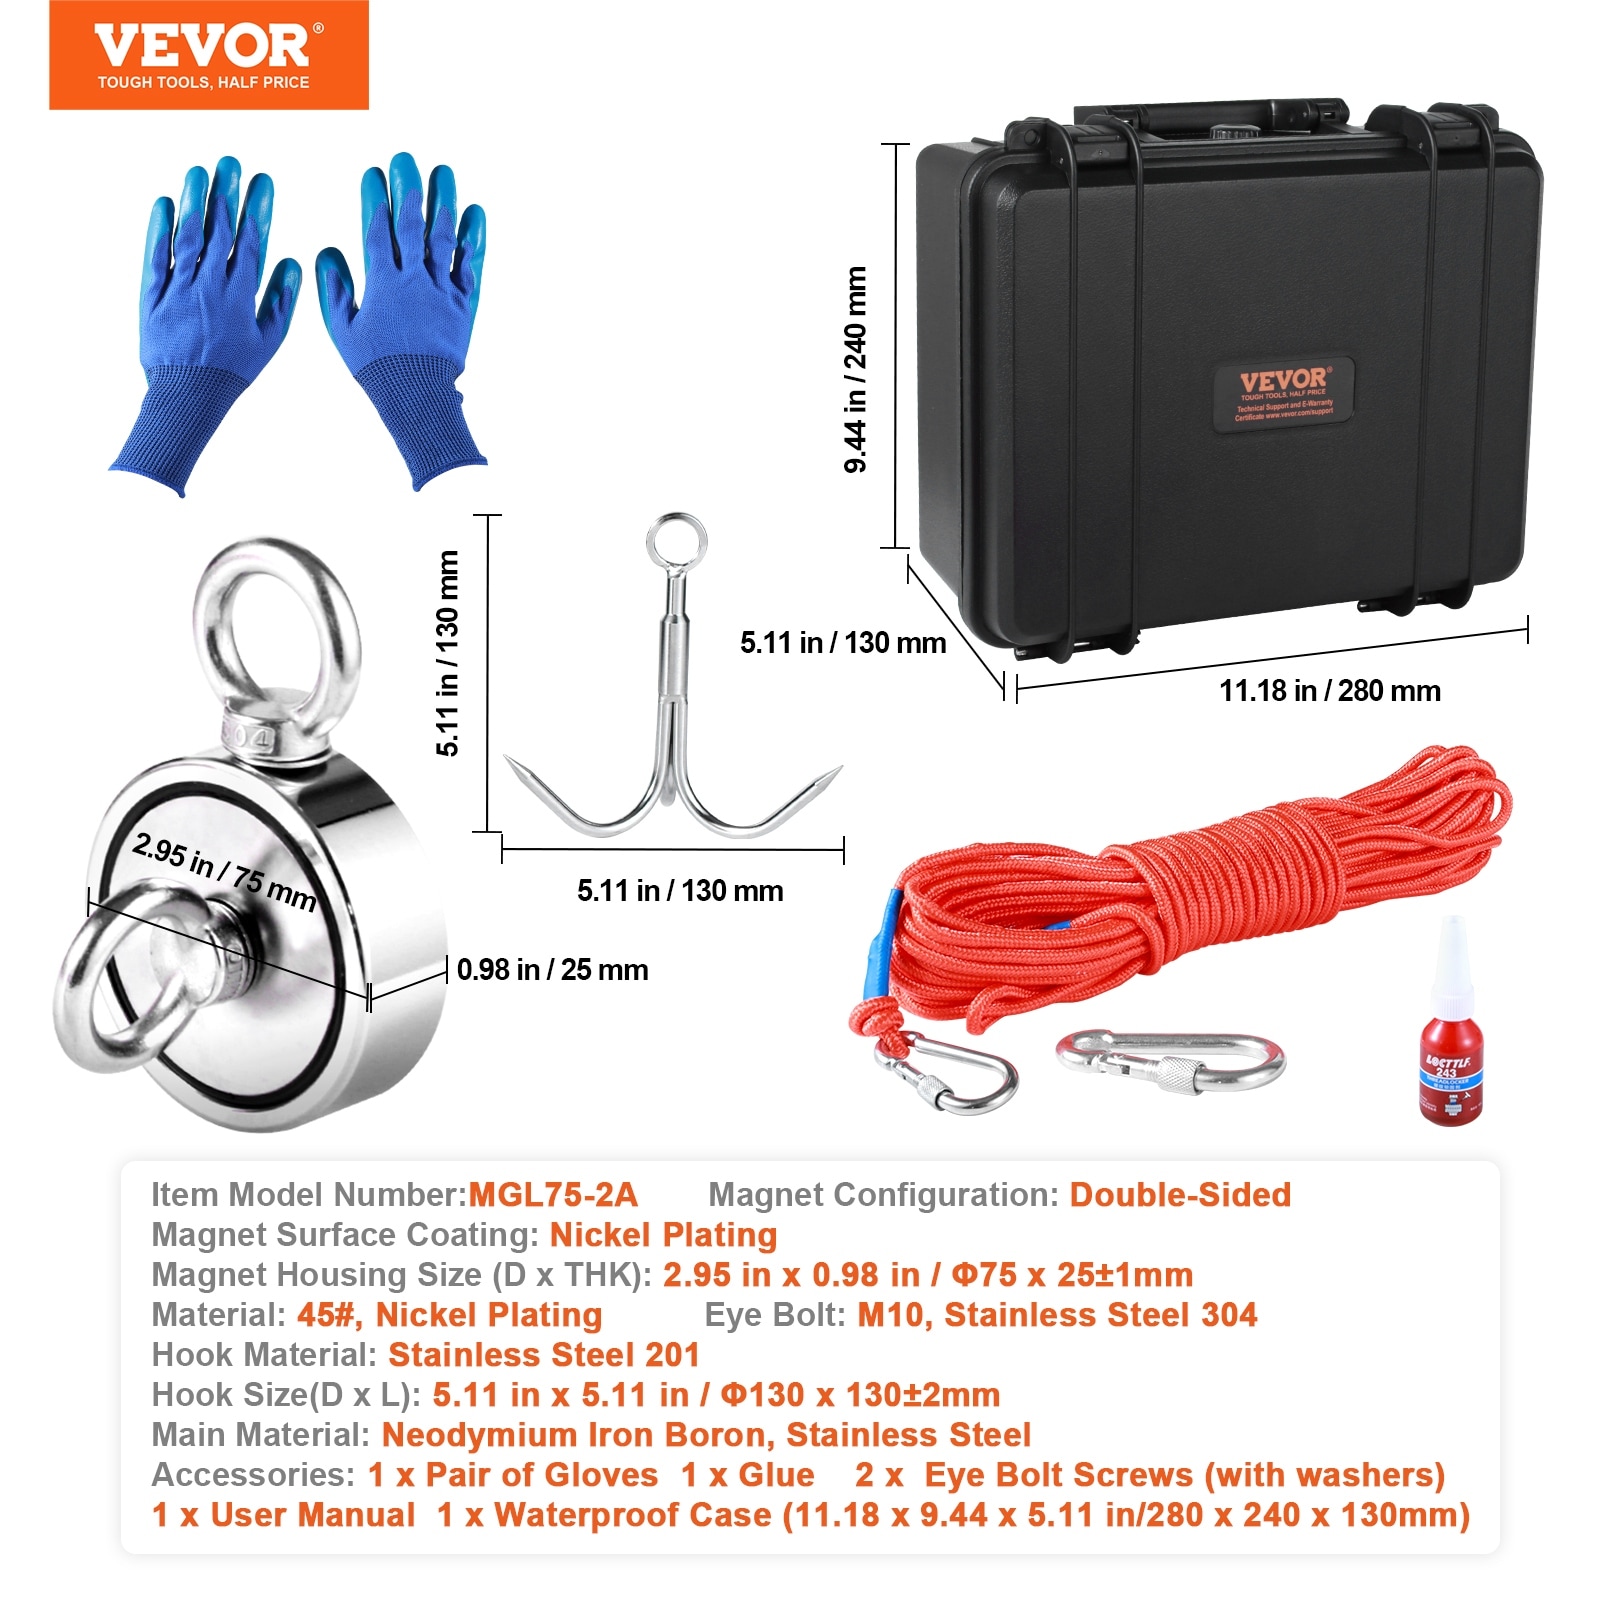 VEVOR Magnet Fishing Kit, 1200lbs,Grappling Hook, Gloves, Waterproof Case,  Threadlocker, Eye Bolt - 2.95 - Bed Bath & Beyond - 39851146